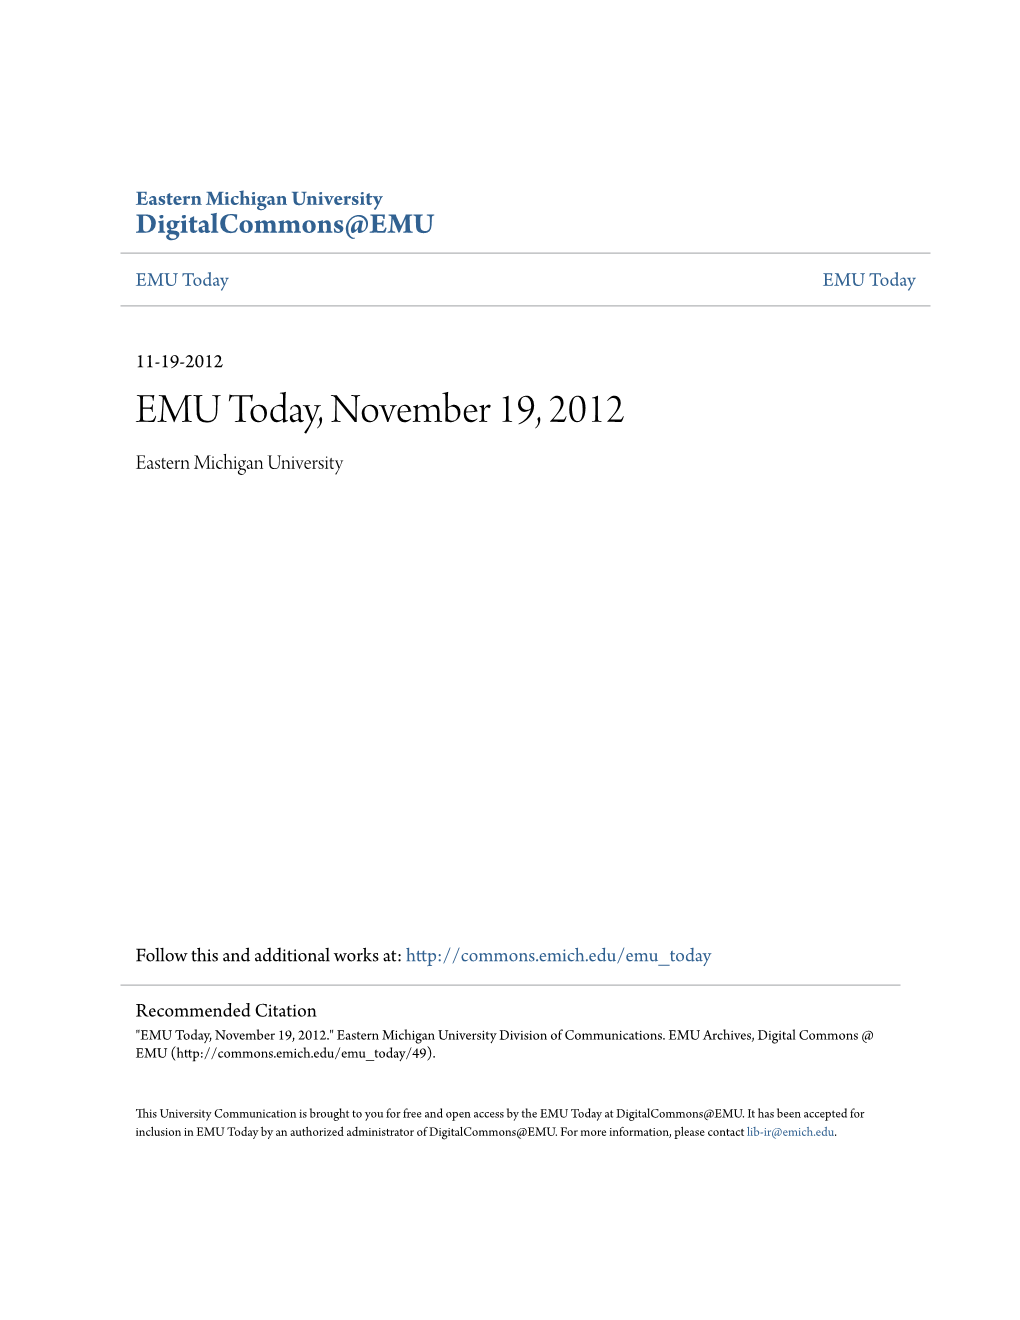 EMU Today, November 19, 2012 Eastern Michigan University